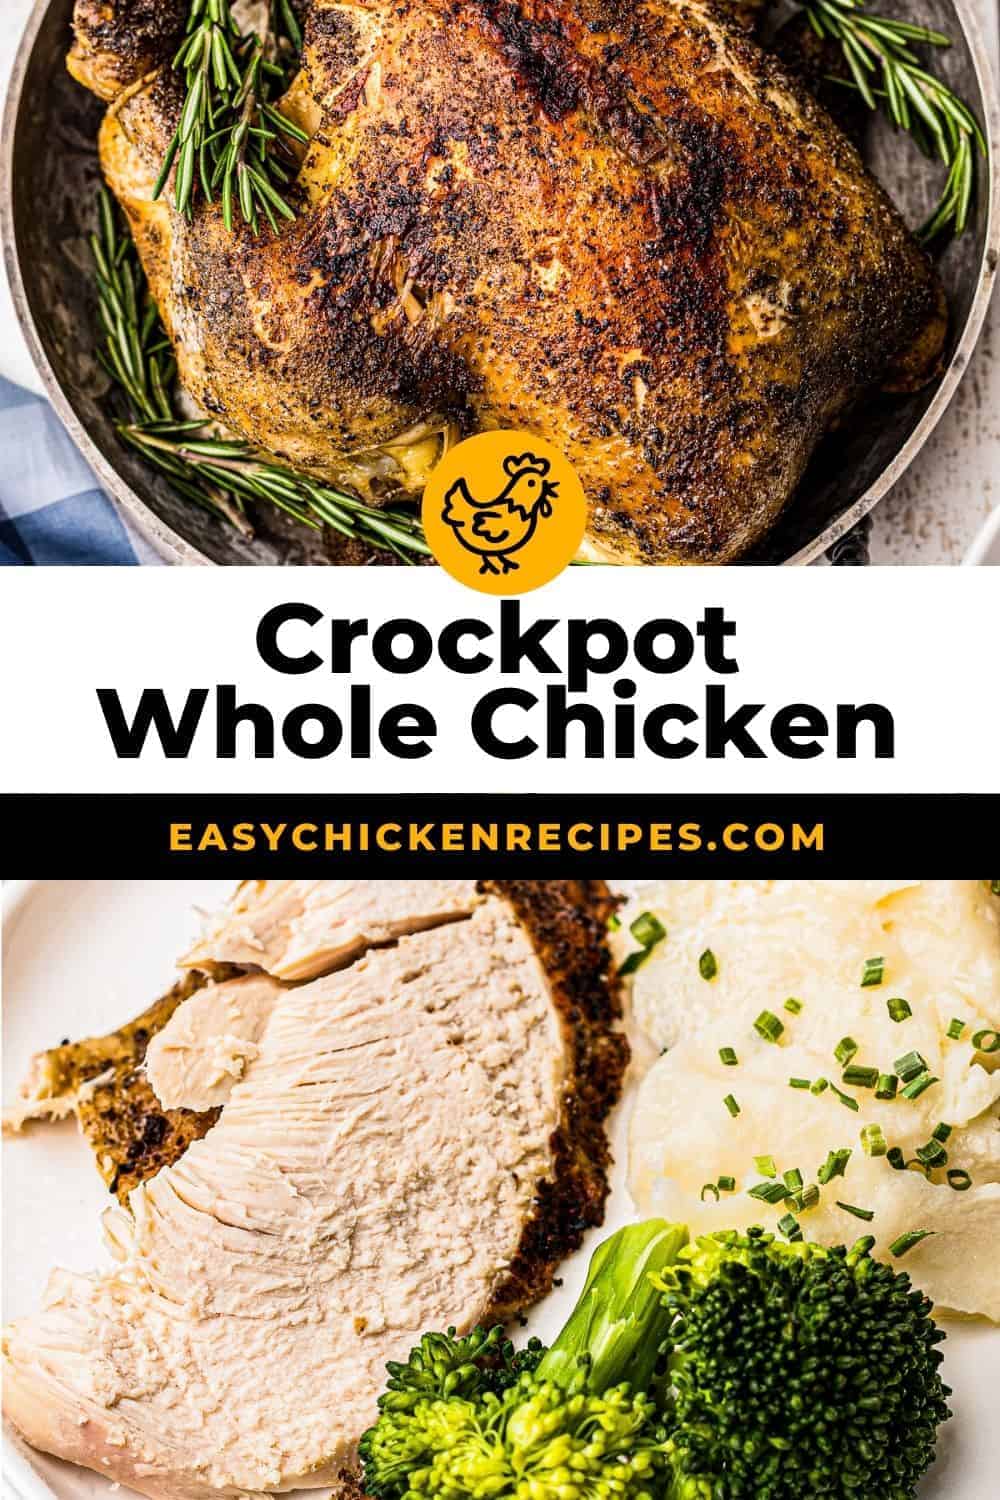 Crockpot Whole Chicken - Easy Chicken Recipes